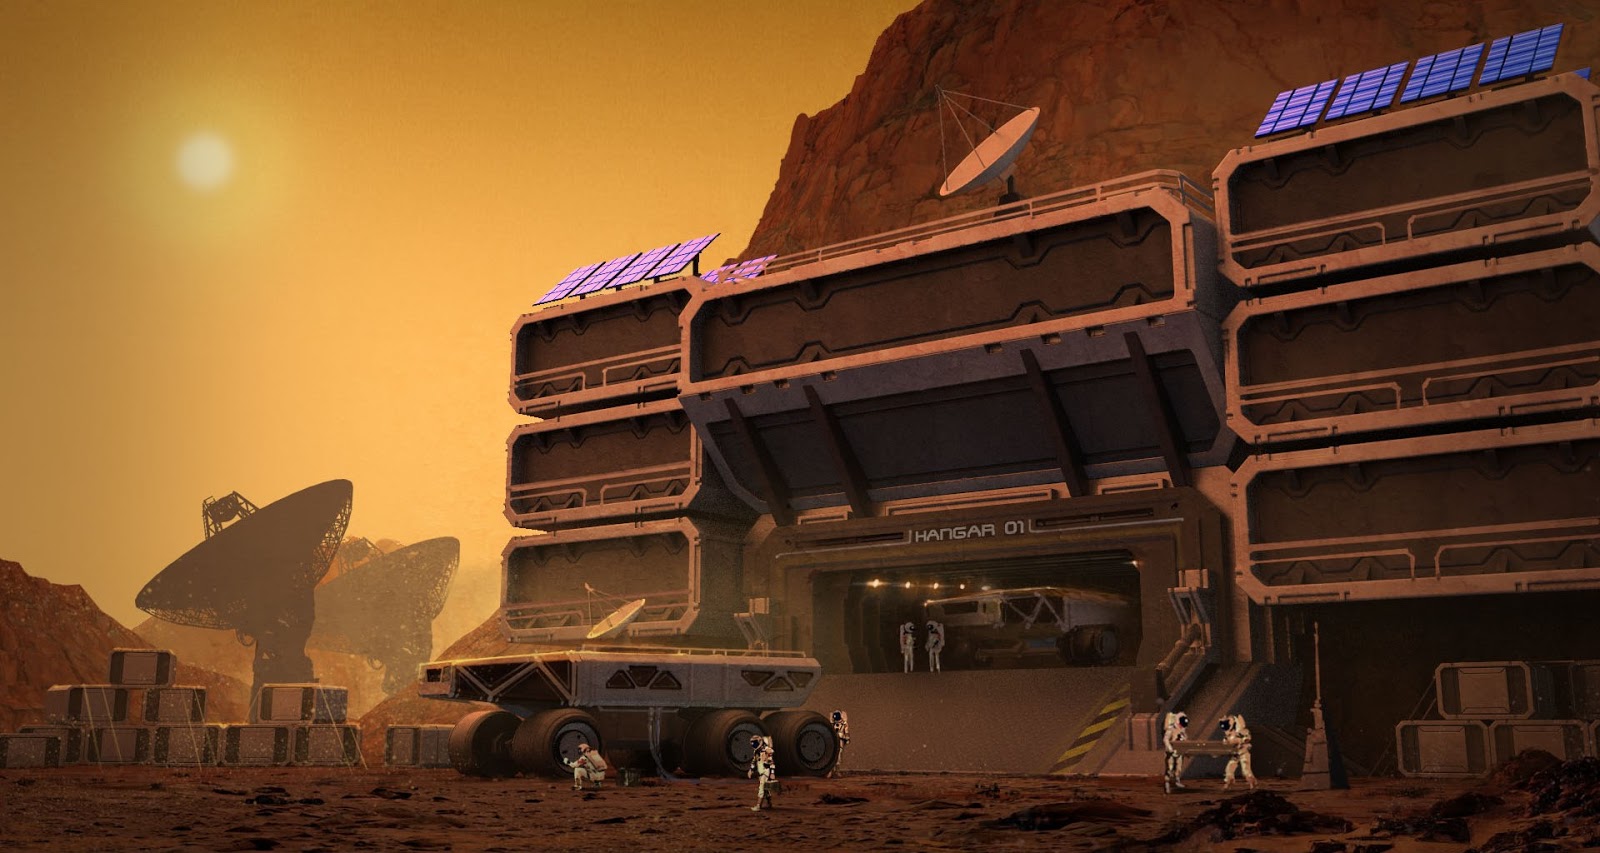 Mars base by George Brad